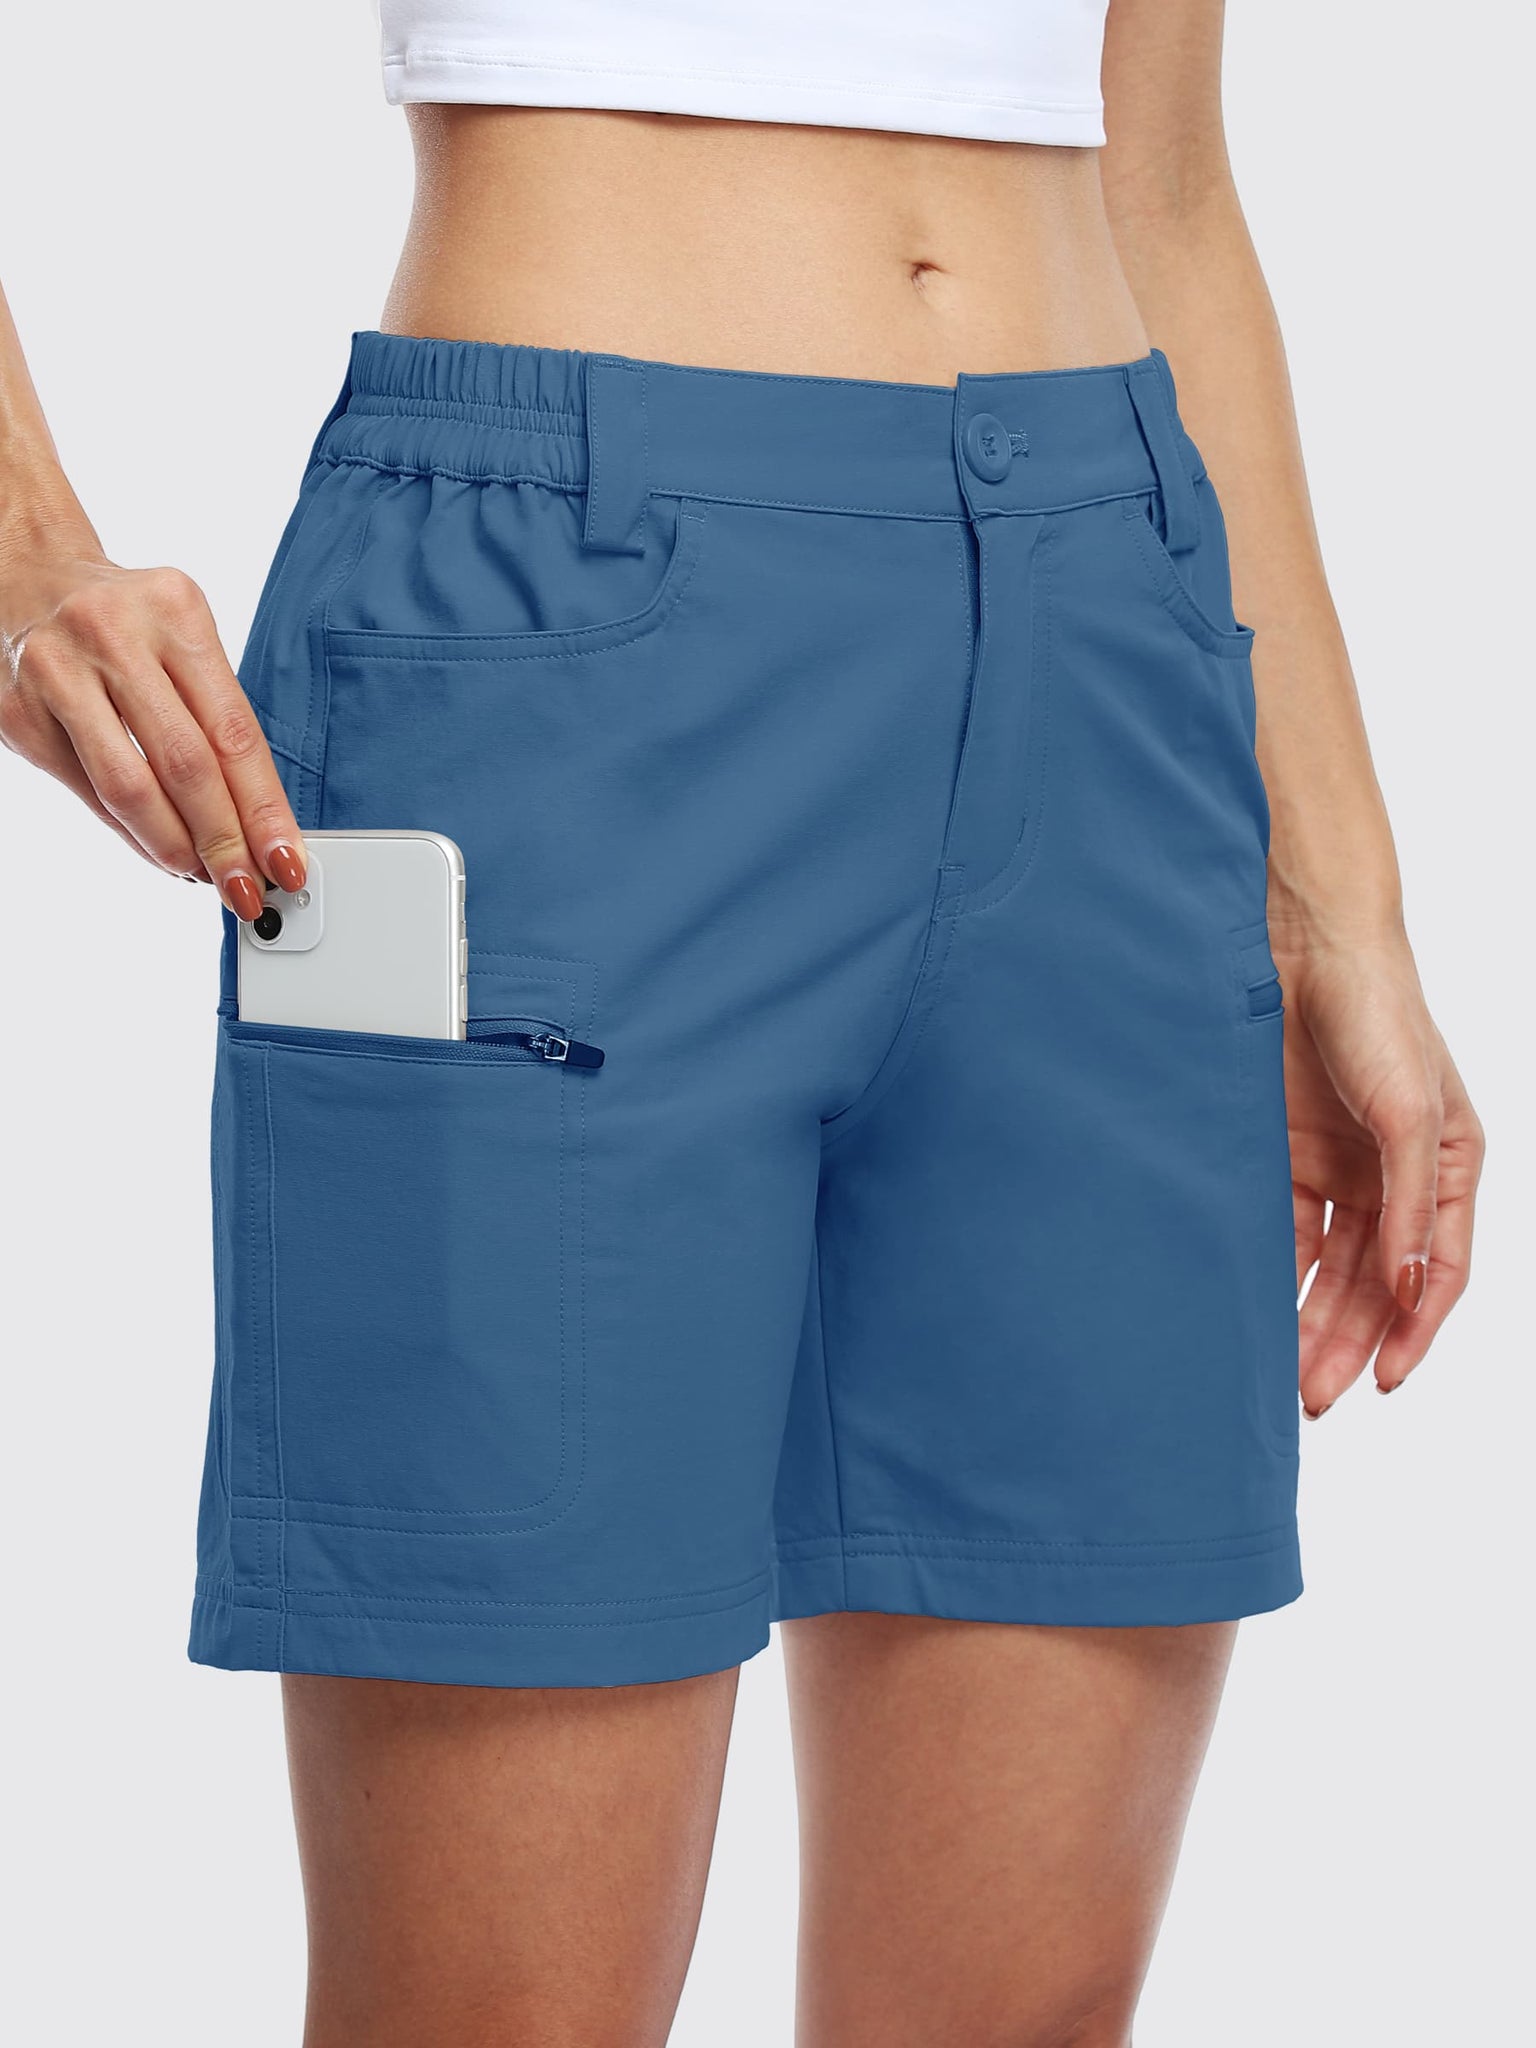 Willit Women's Outdoor Cargo Shorts 6 Inseam_Blue_model4